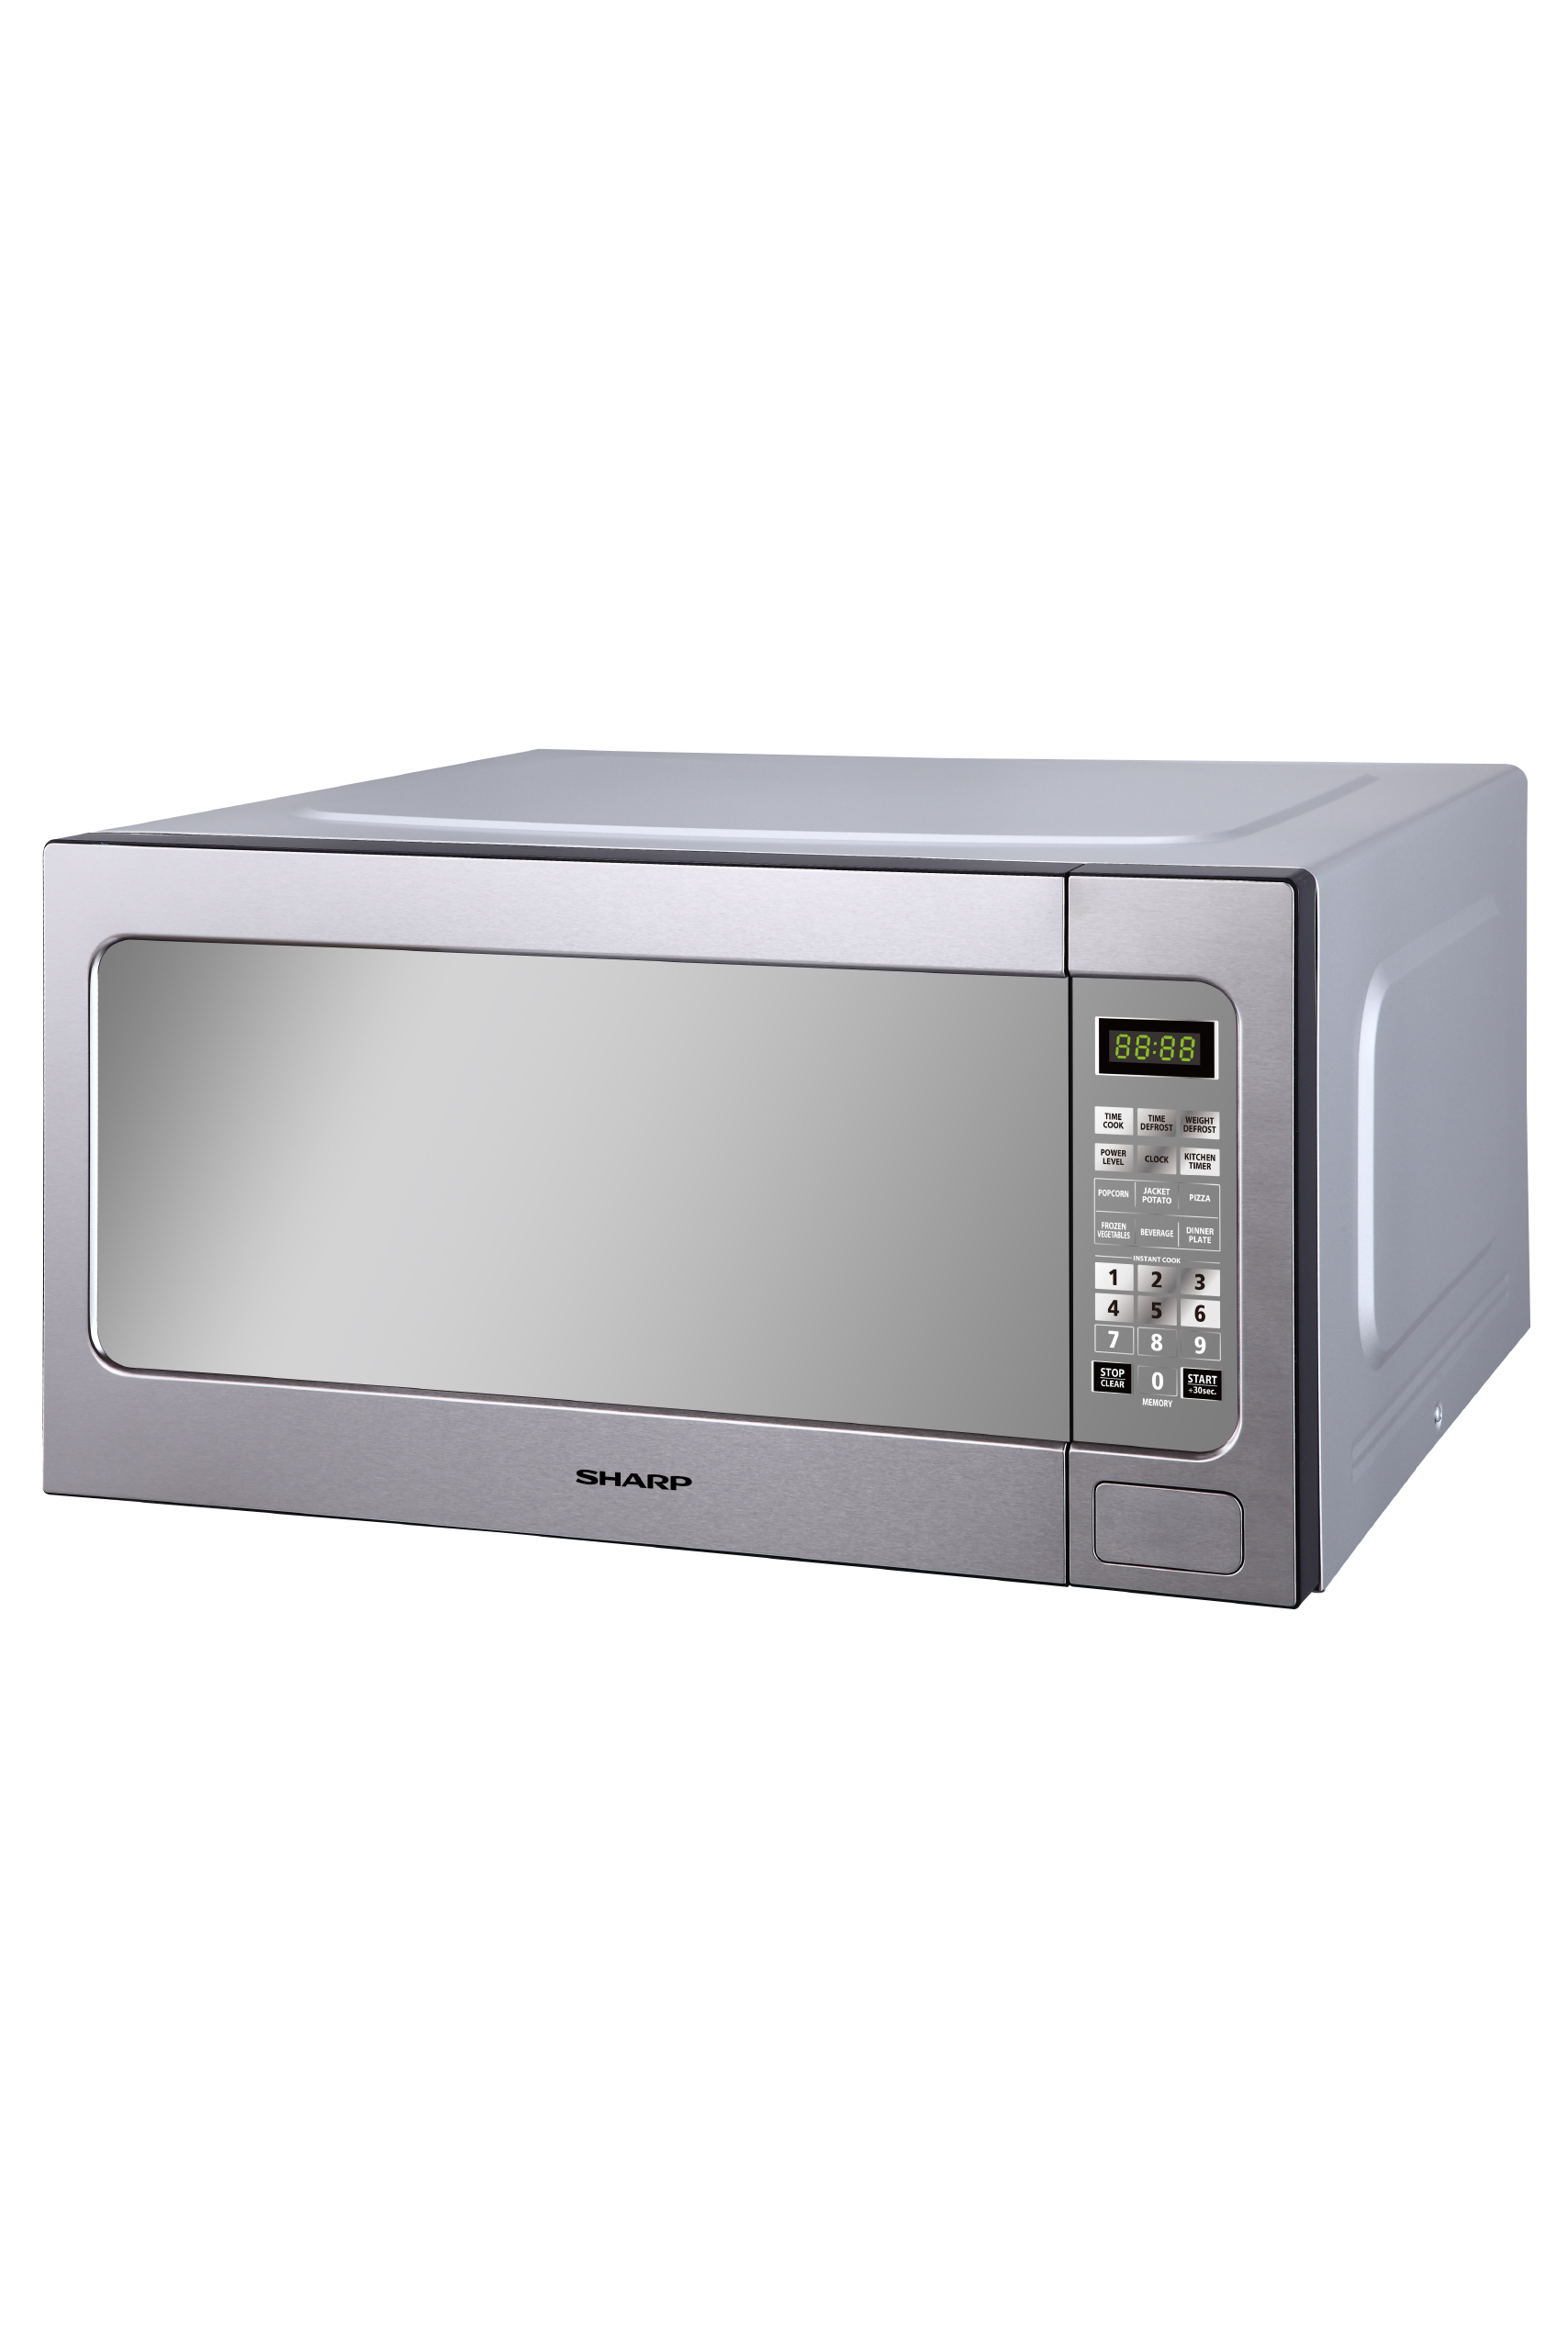 Sharp Microwave 62 Liter